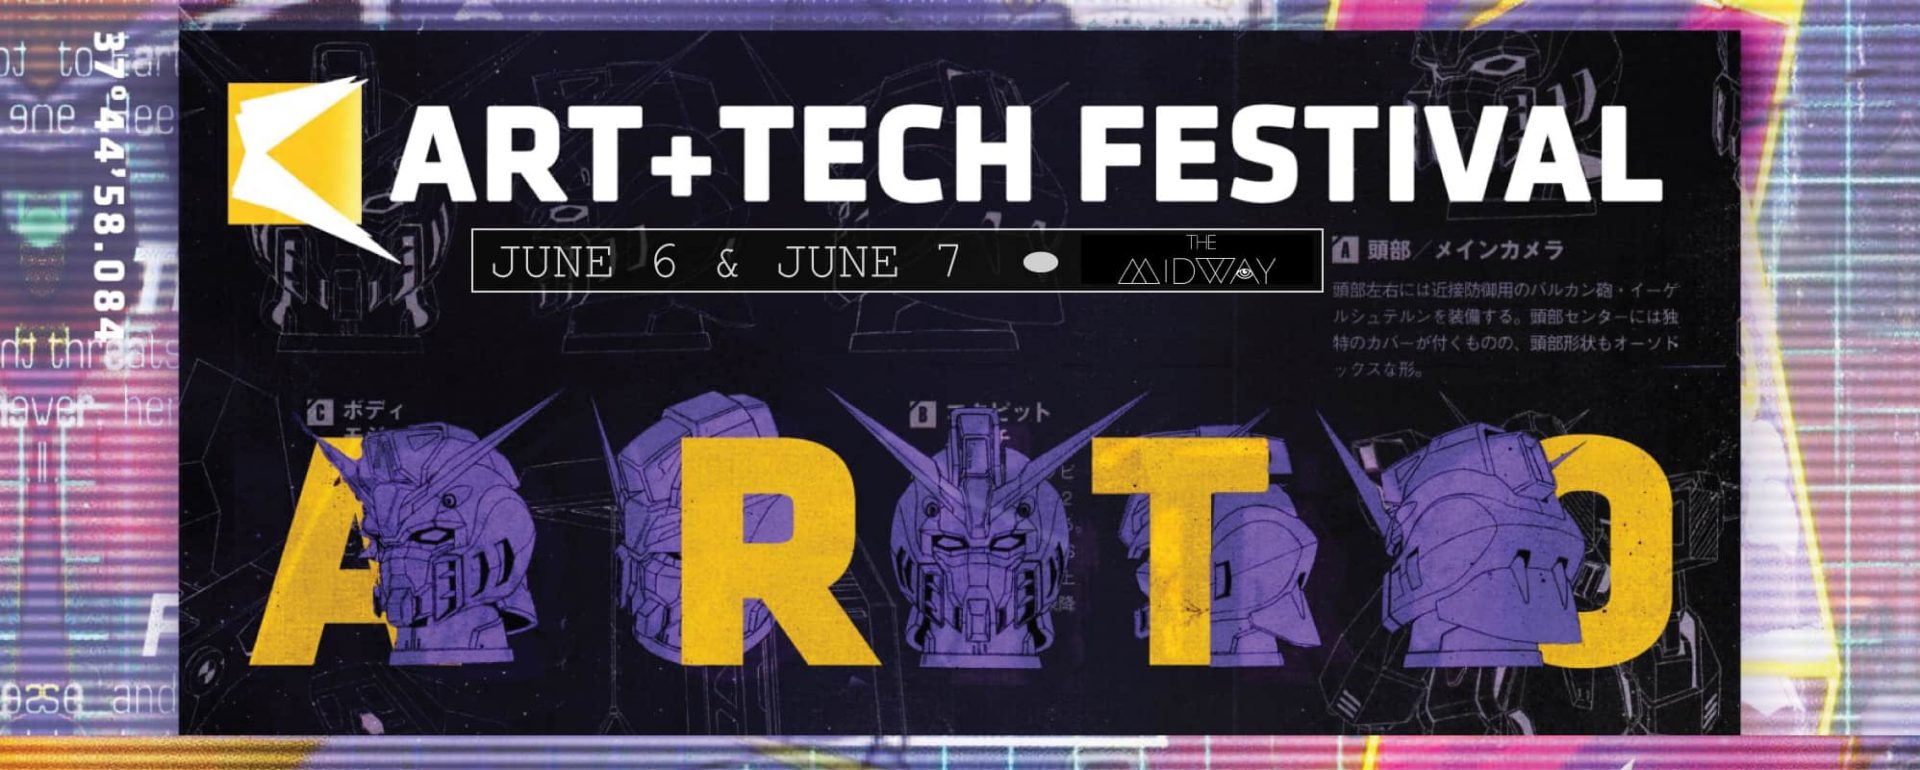 Art and Tech Festival San Francisco